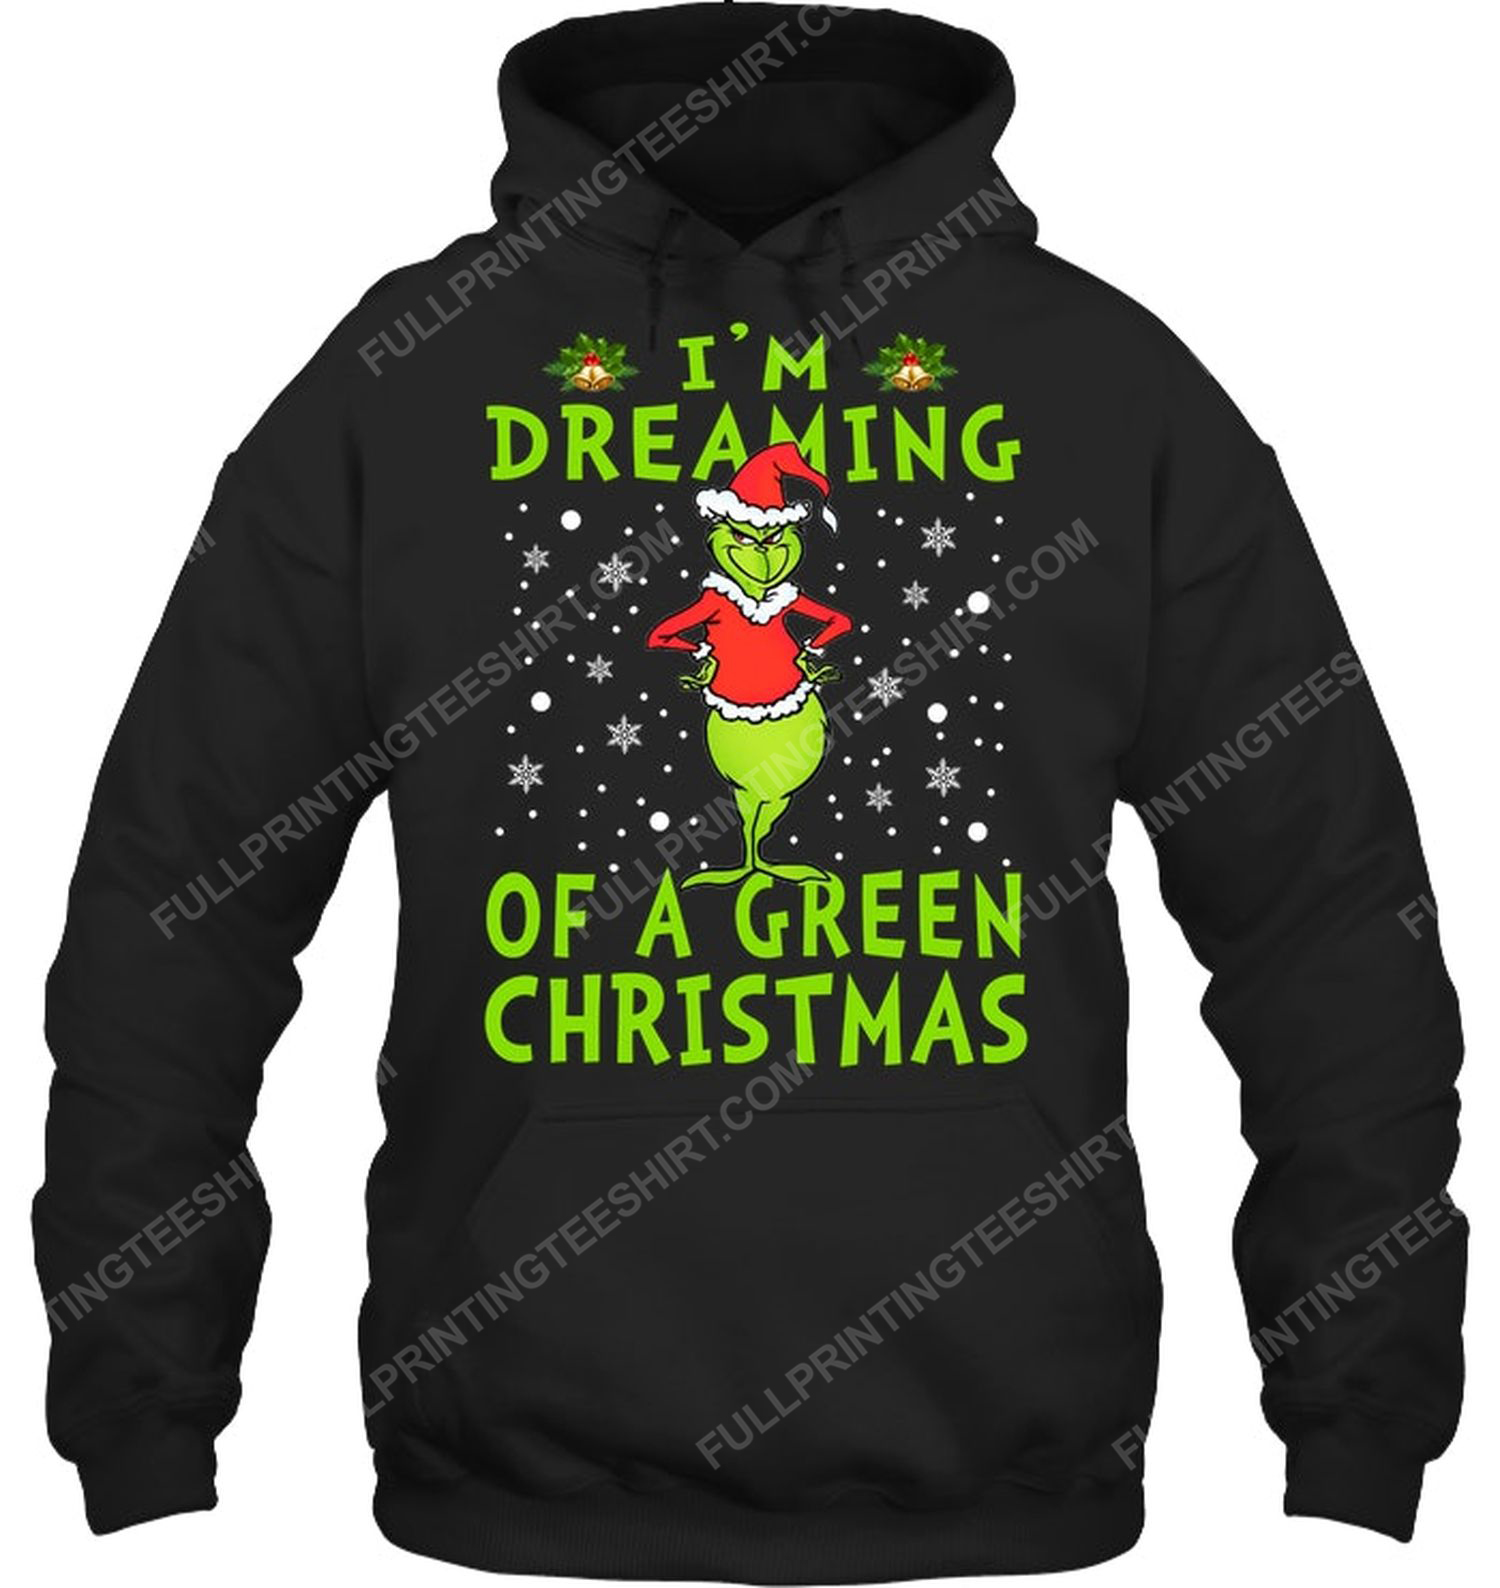 Christmas time i'm dreaming of a green christmas hoodie